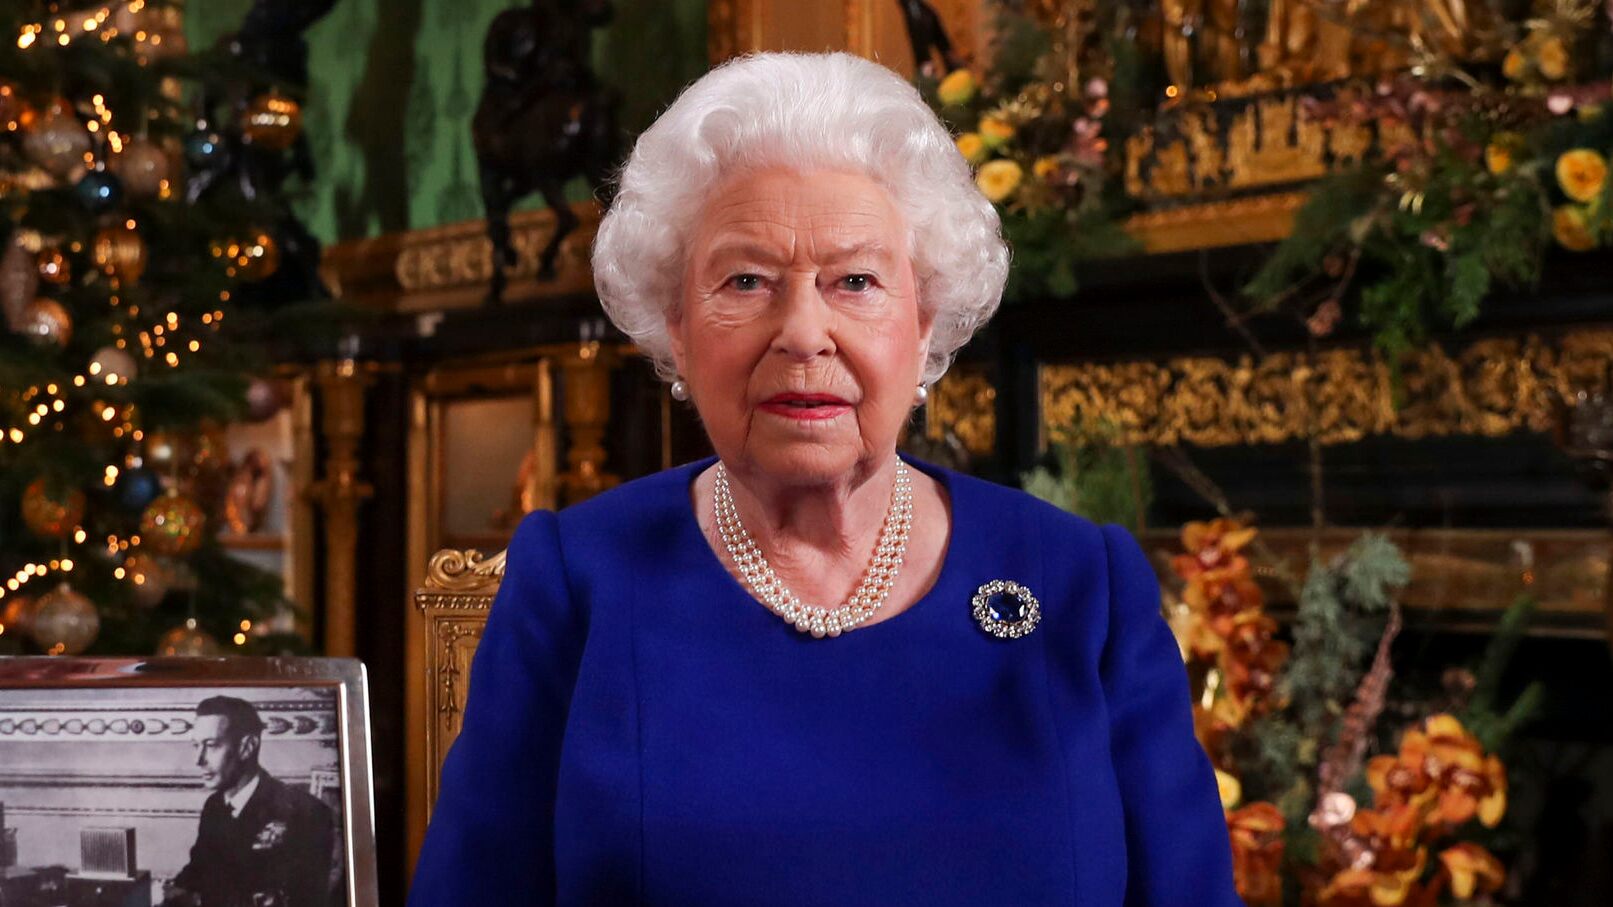 Queen Elizabeth remembers 'quite bumpy' year in annual Christmas address - www.foxnews.com